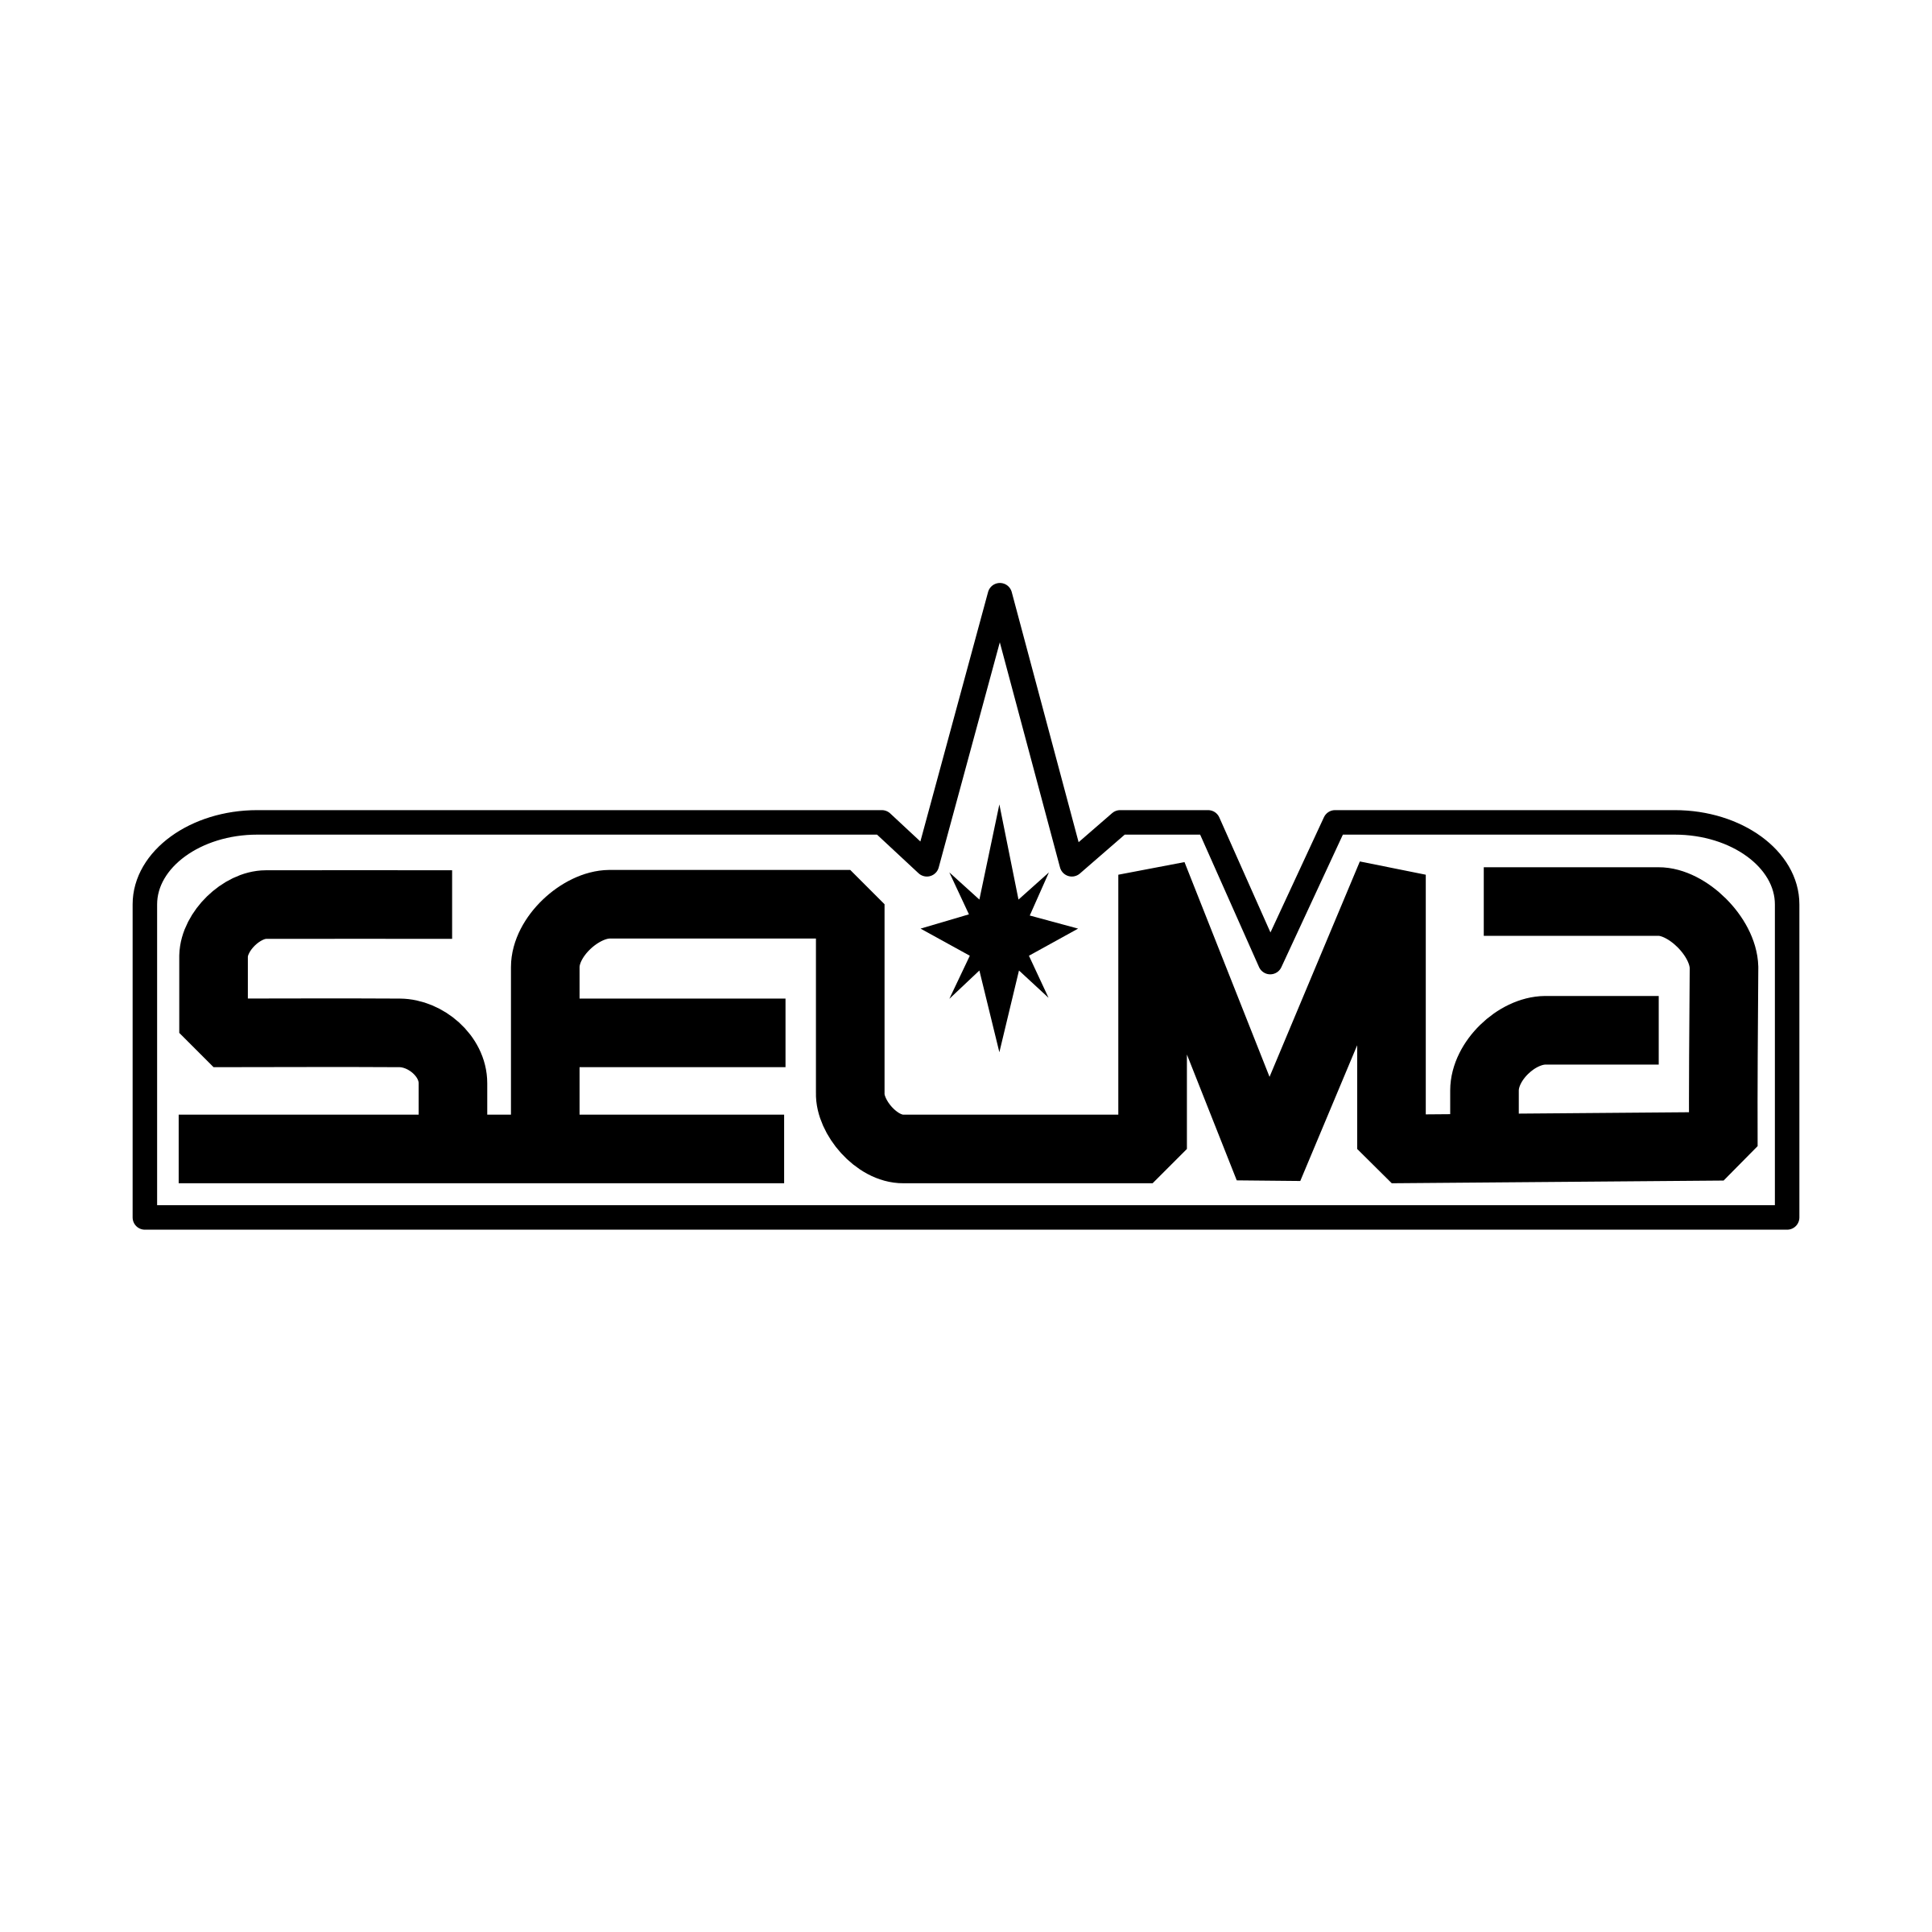 Selma Logo - Selma Logo PNG Transparent & SVG Vector - Freebie Supply